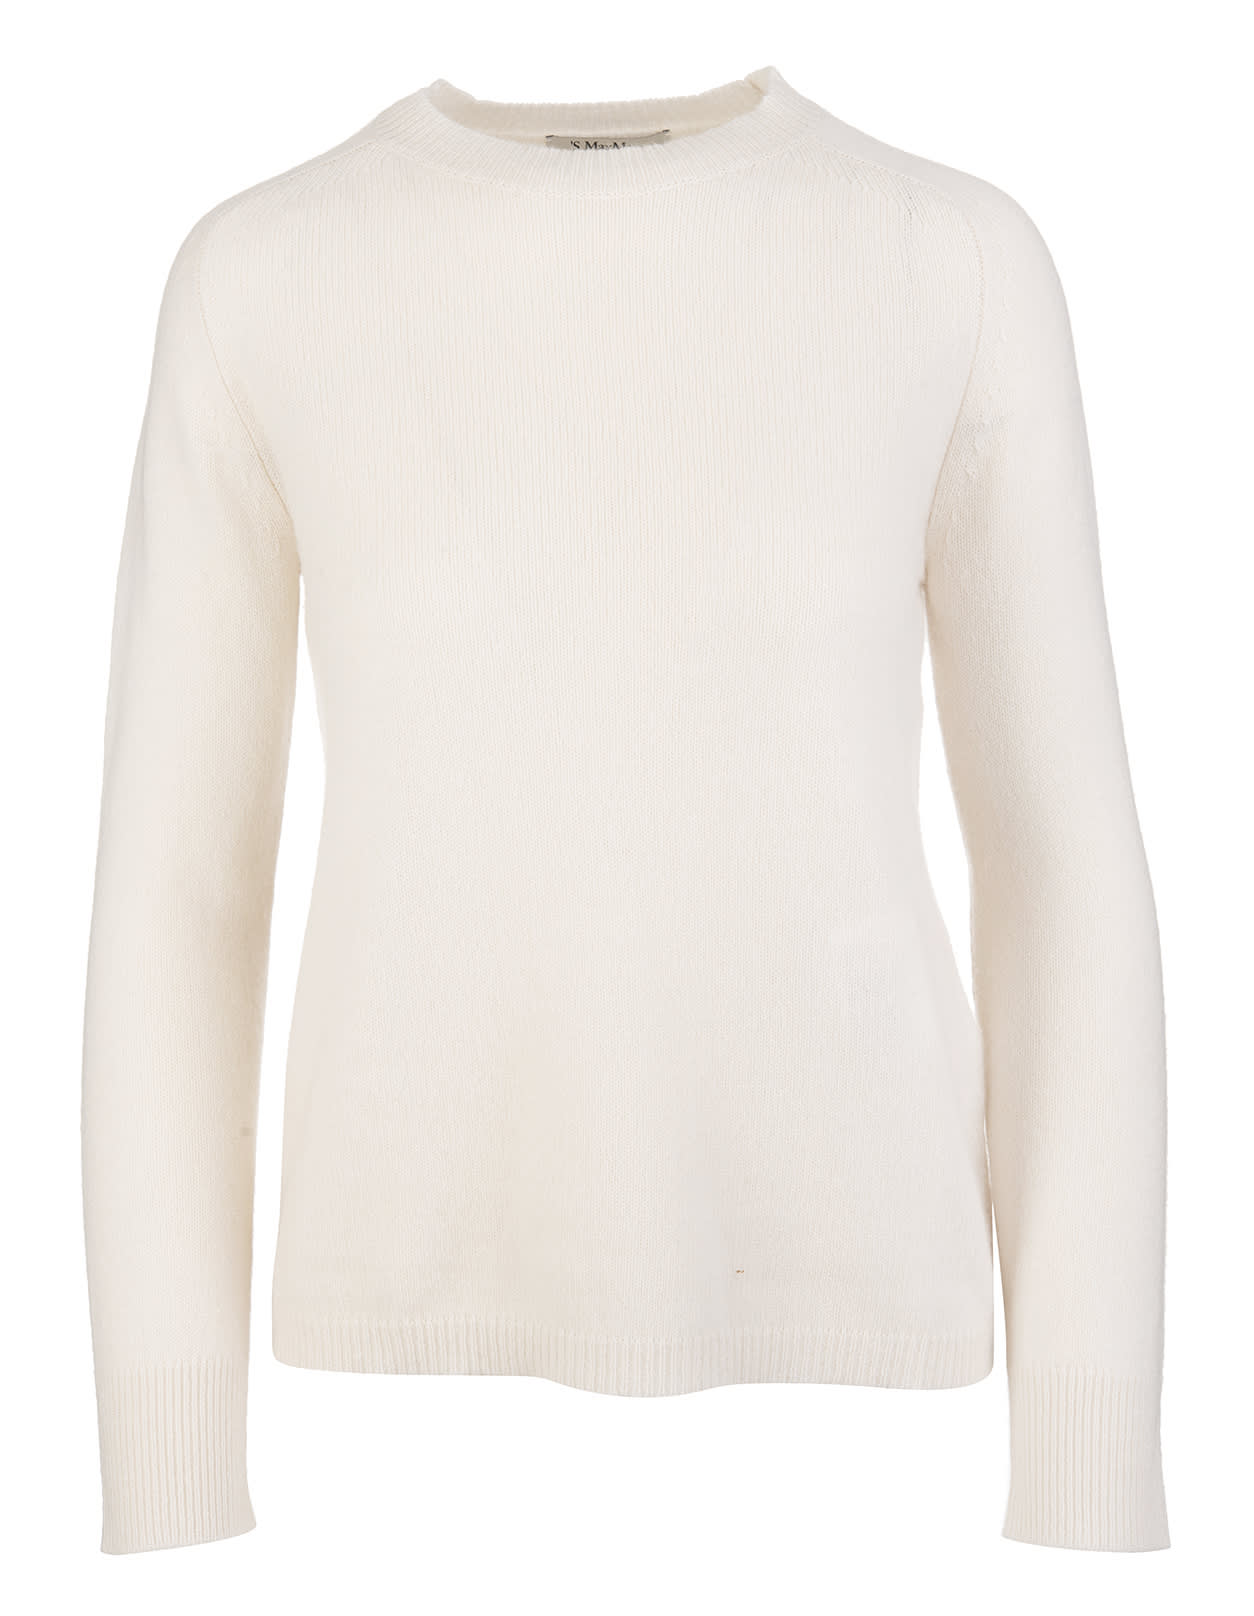 'S Max Mara White Eclisse Sweater